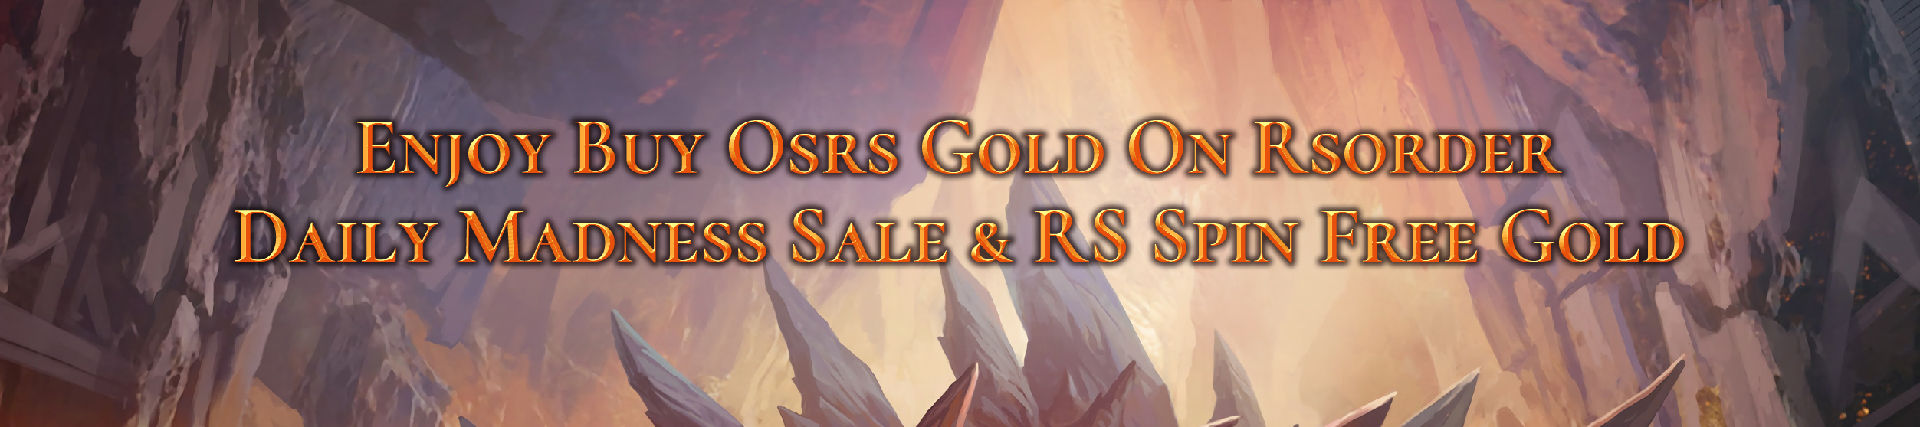 Enjoy Buy Osrs Gold On Rsorder, Daily Madness Sale